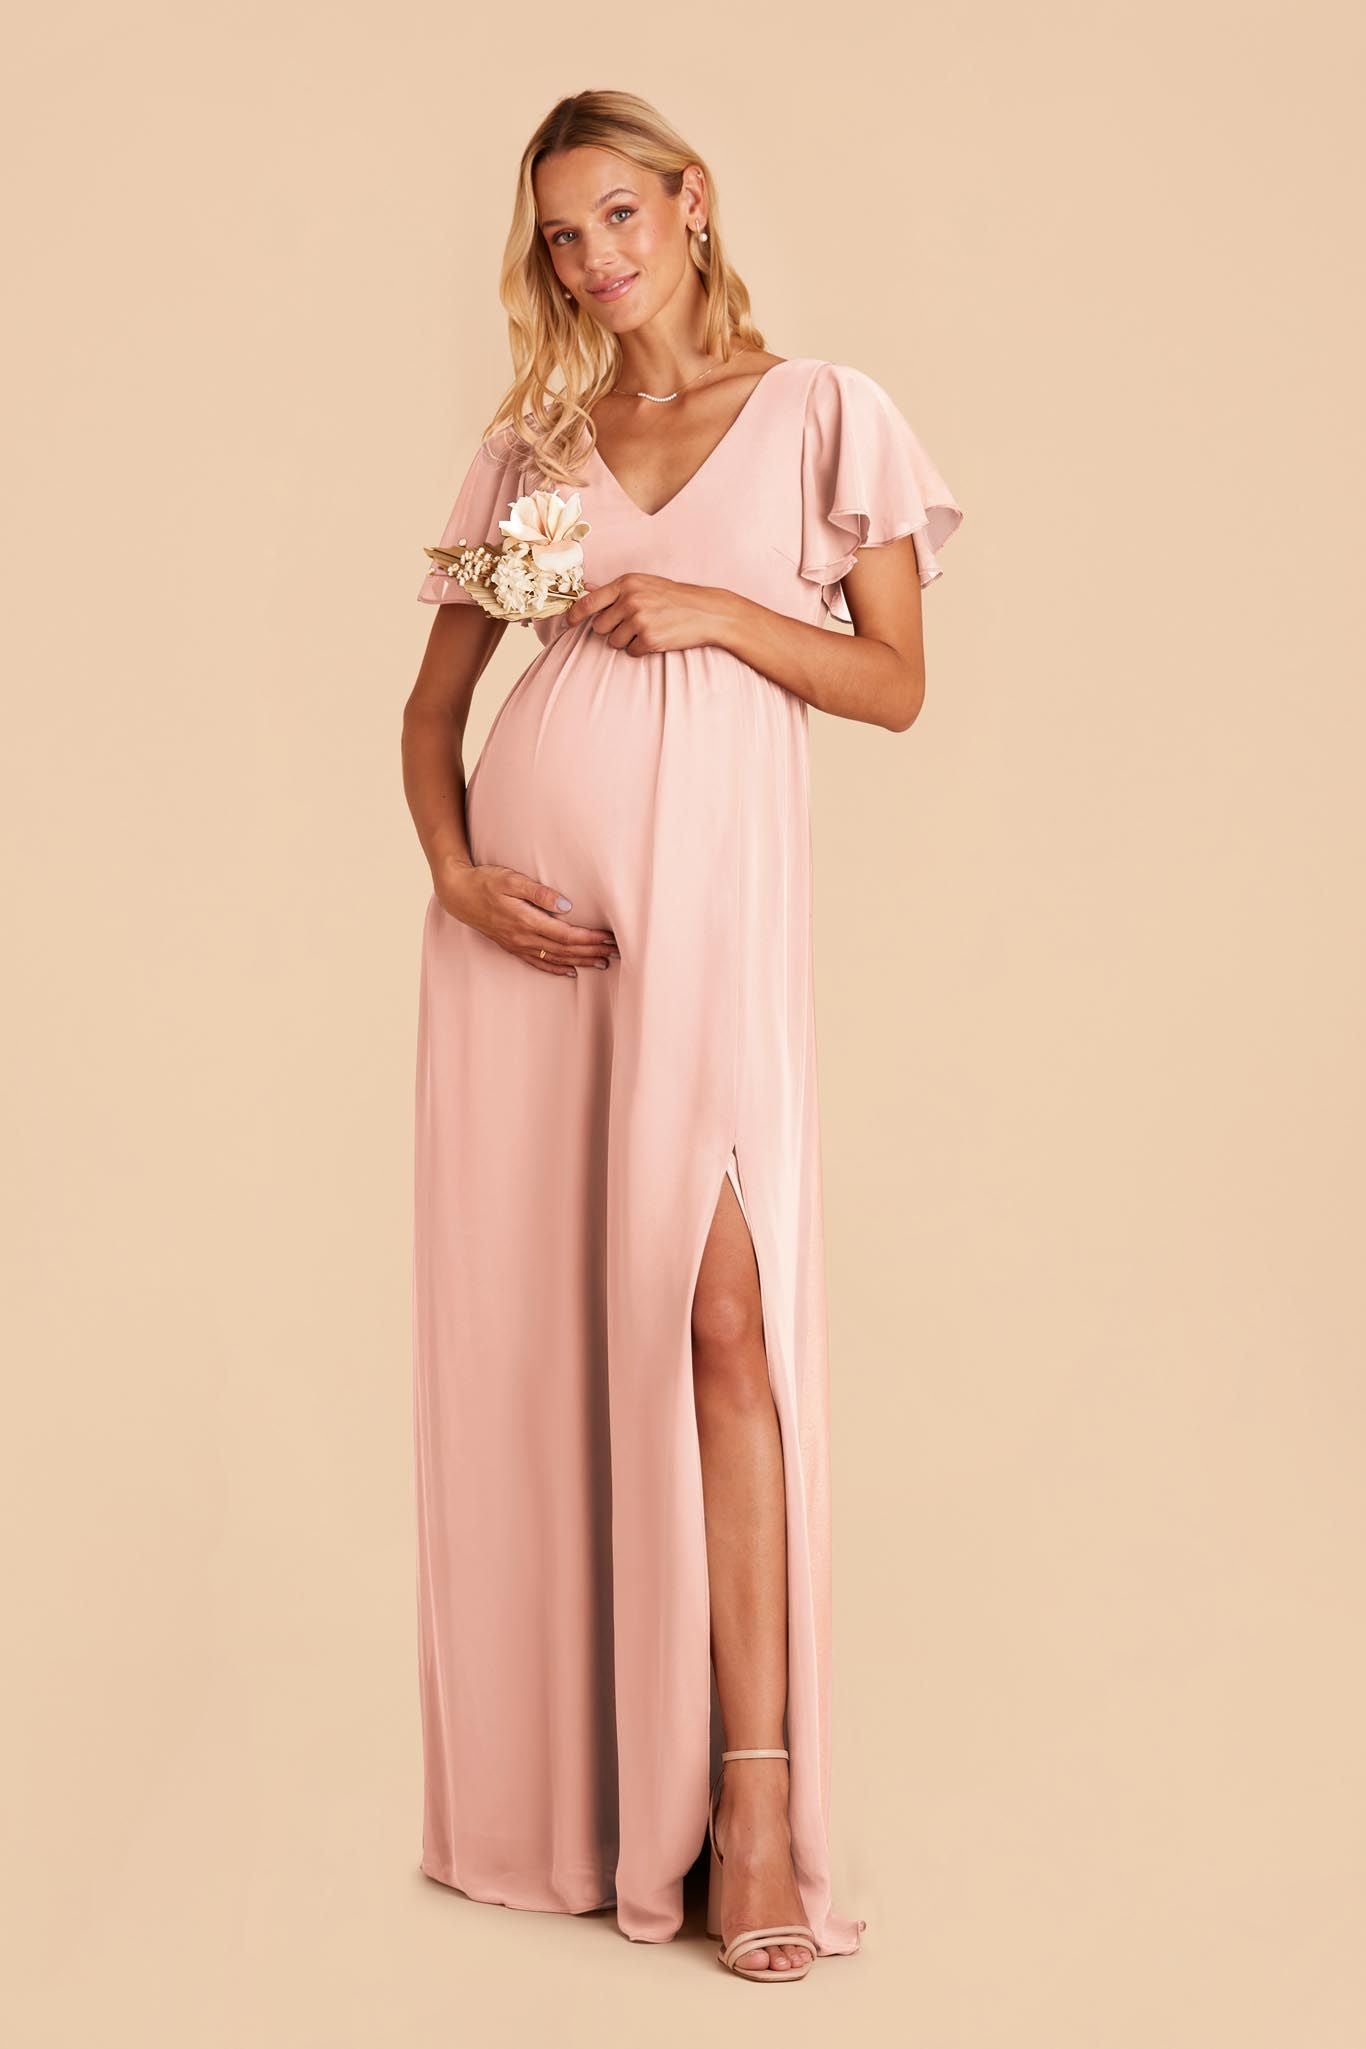 Hannah Empire Dress - Blush Pink